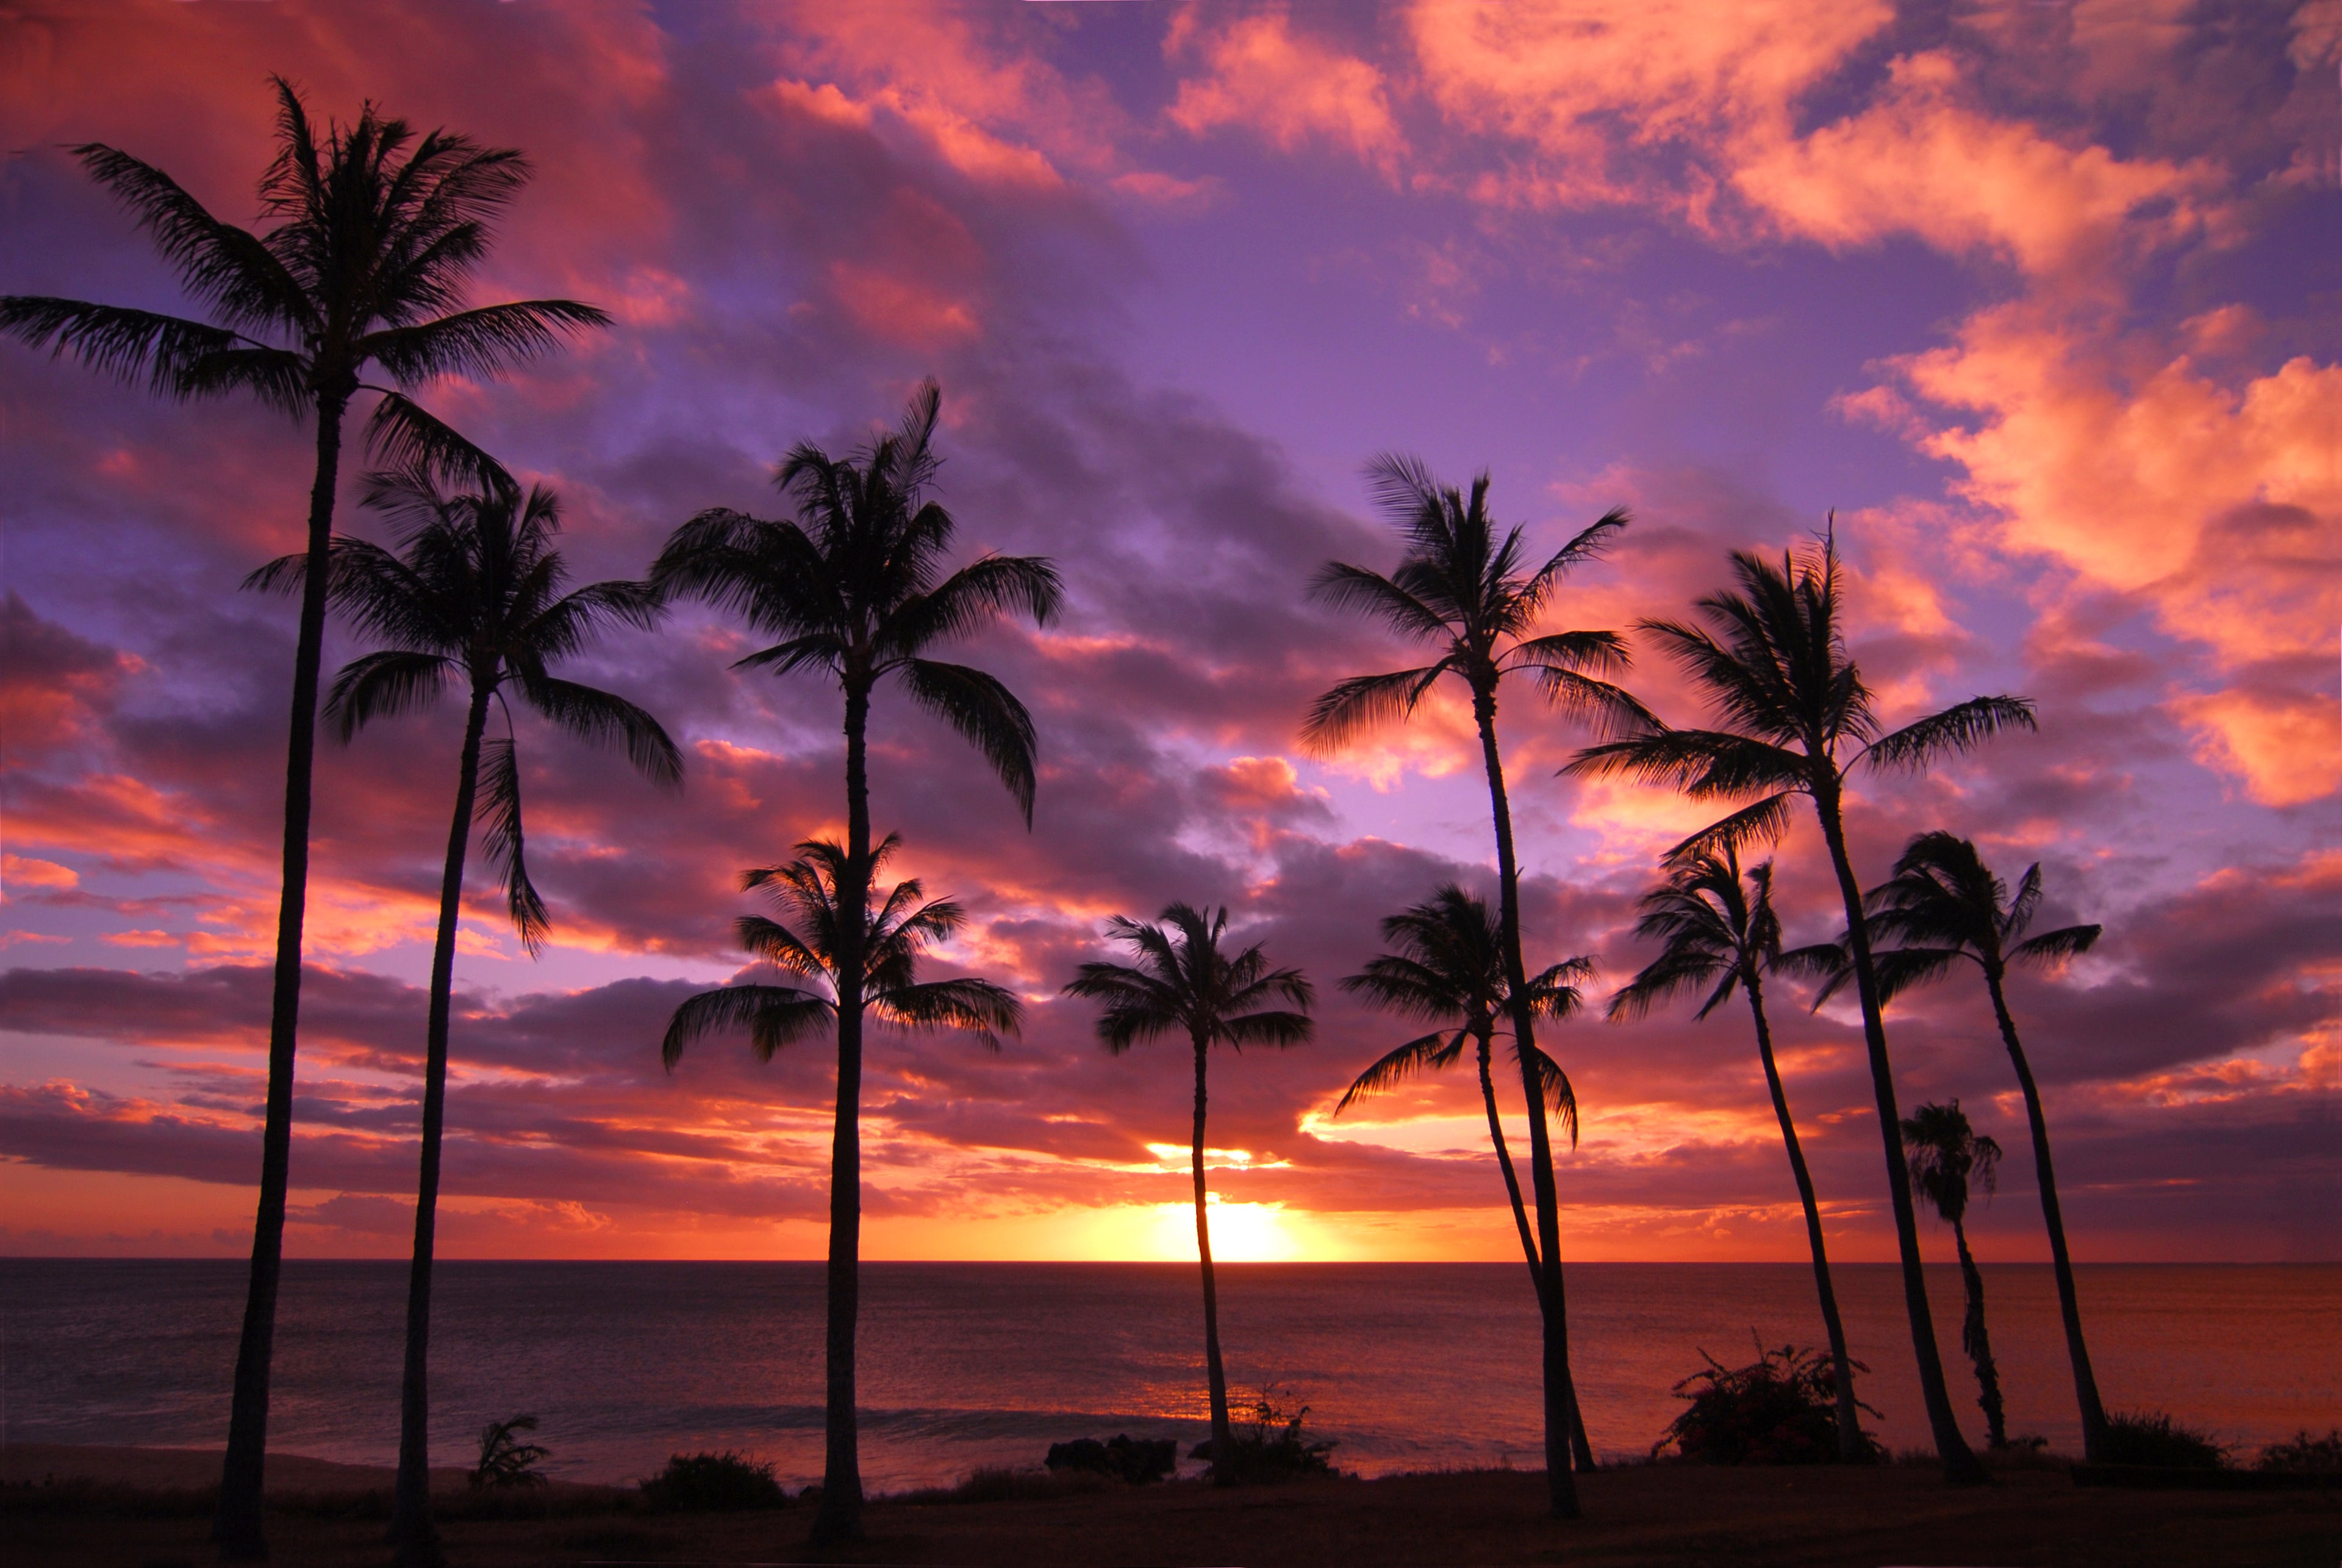 Stunning Hawaiian sunset with purple, pink, peach, yellow and orange colors. Inspiration for SurferGrl Studio.